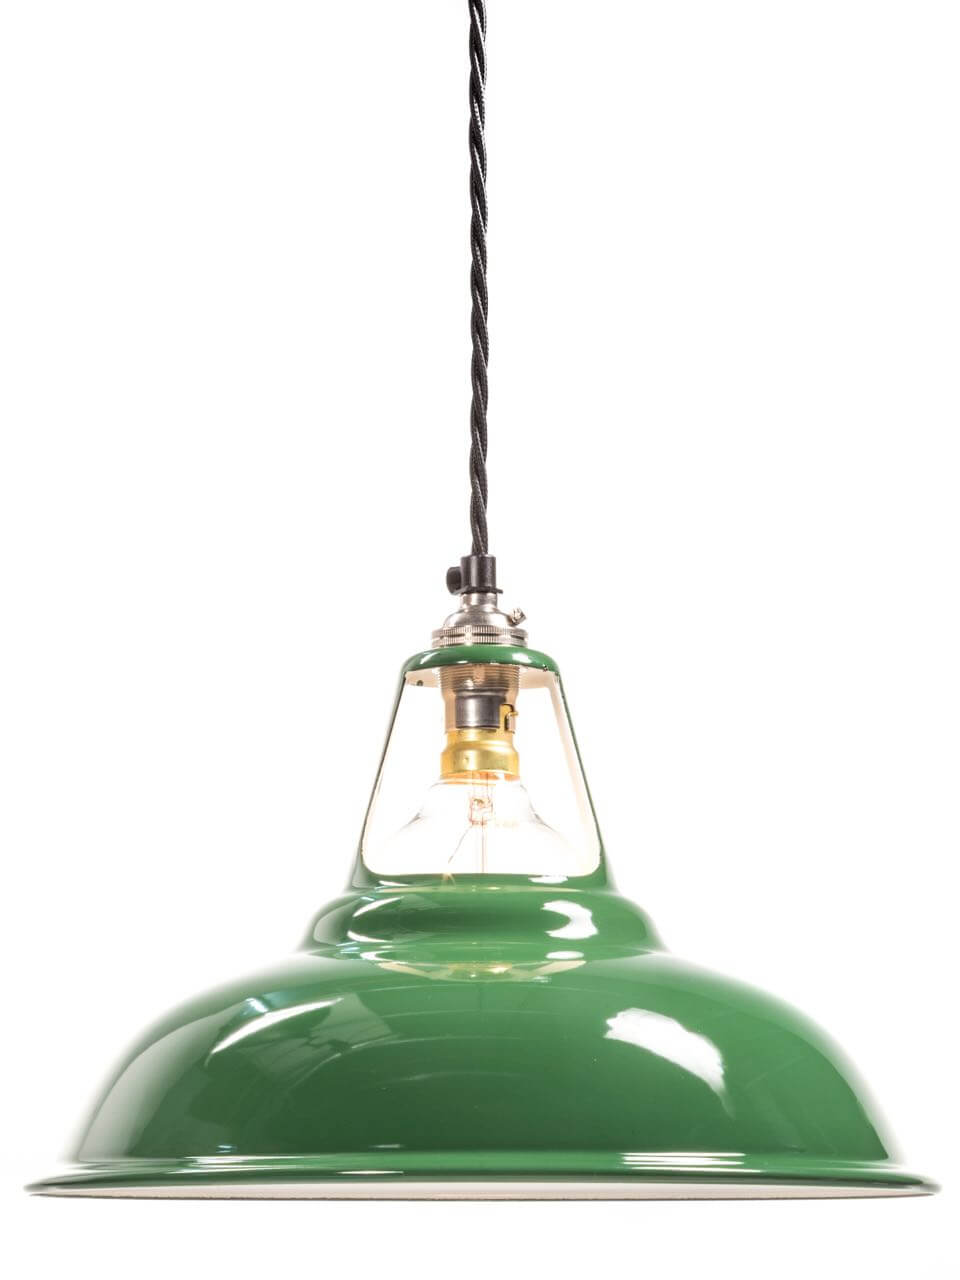 Green Enamel Coolicon Lamp Shade